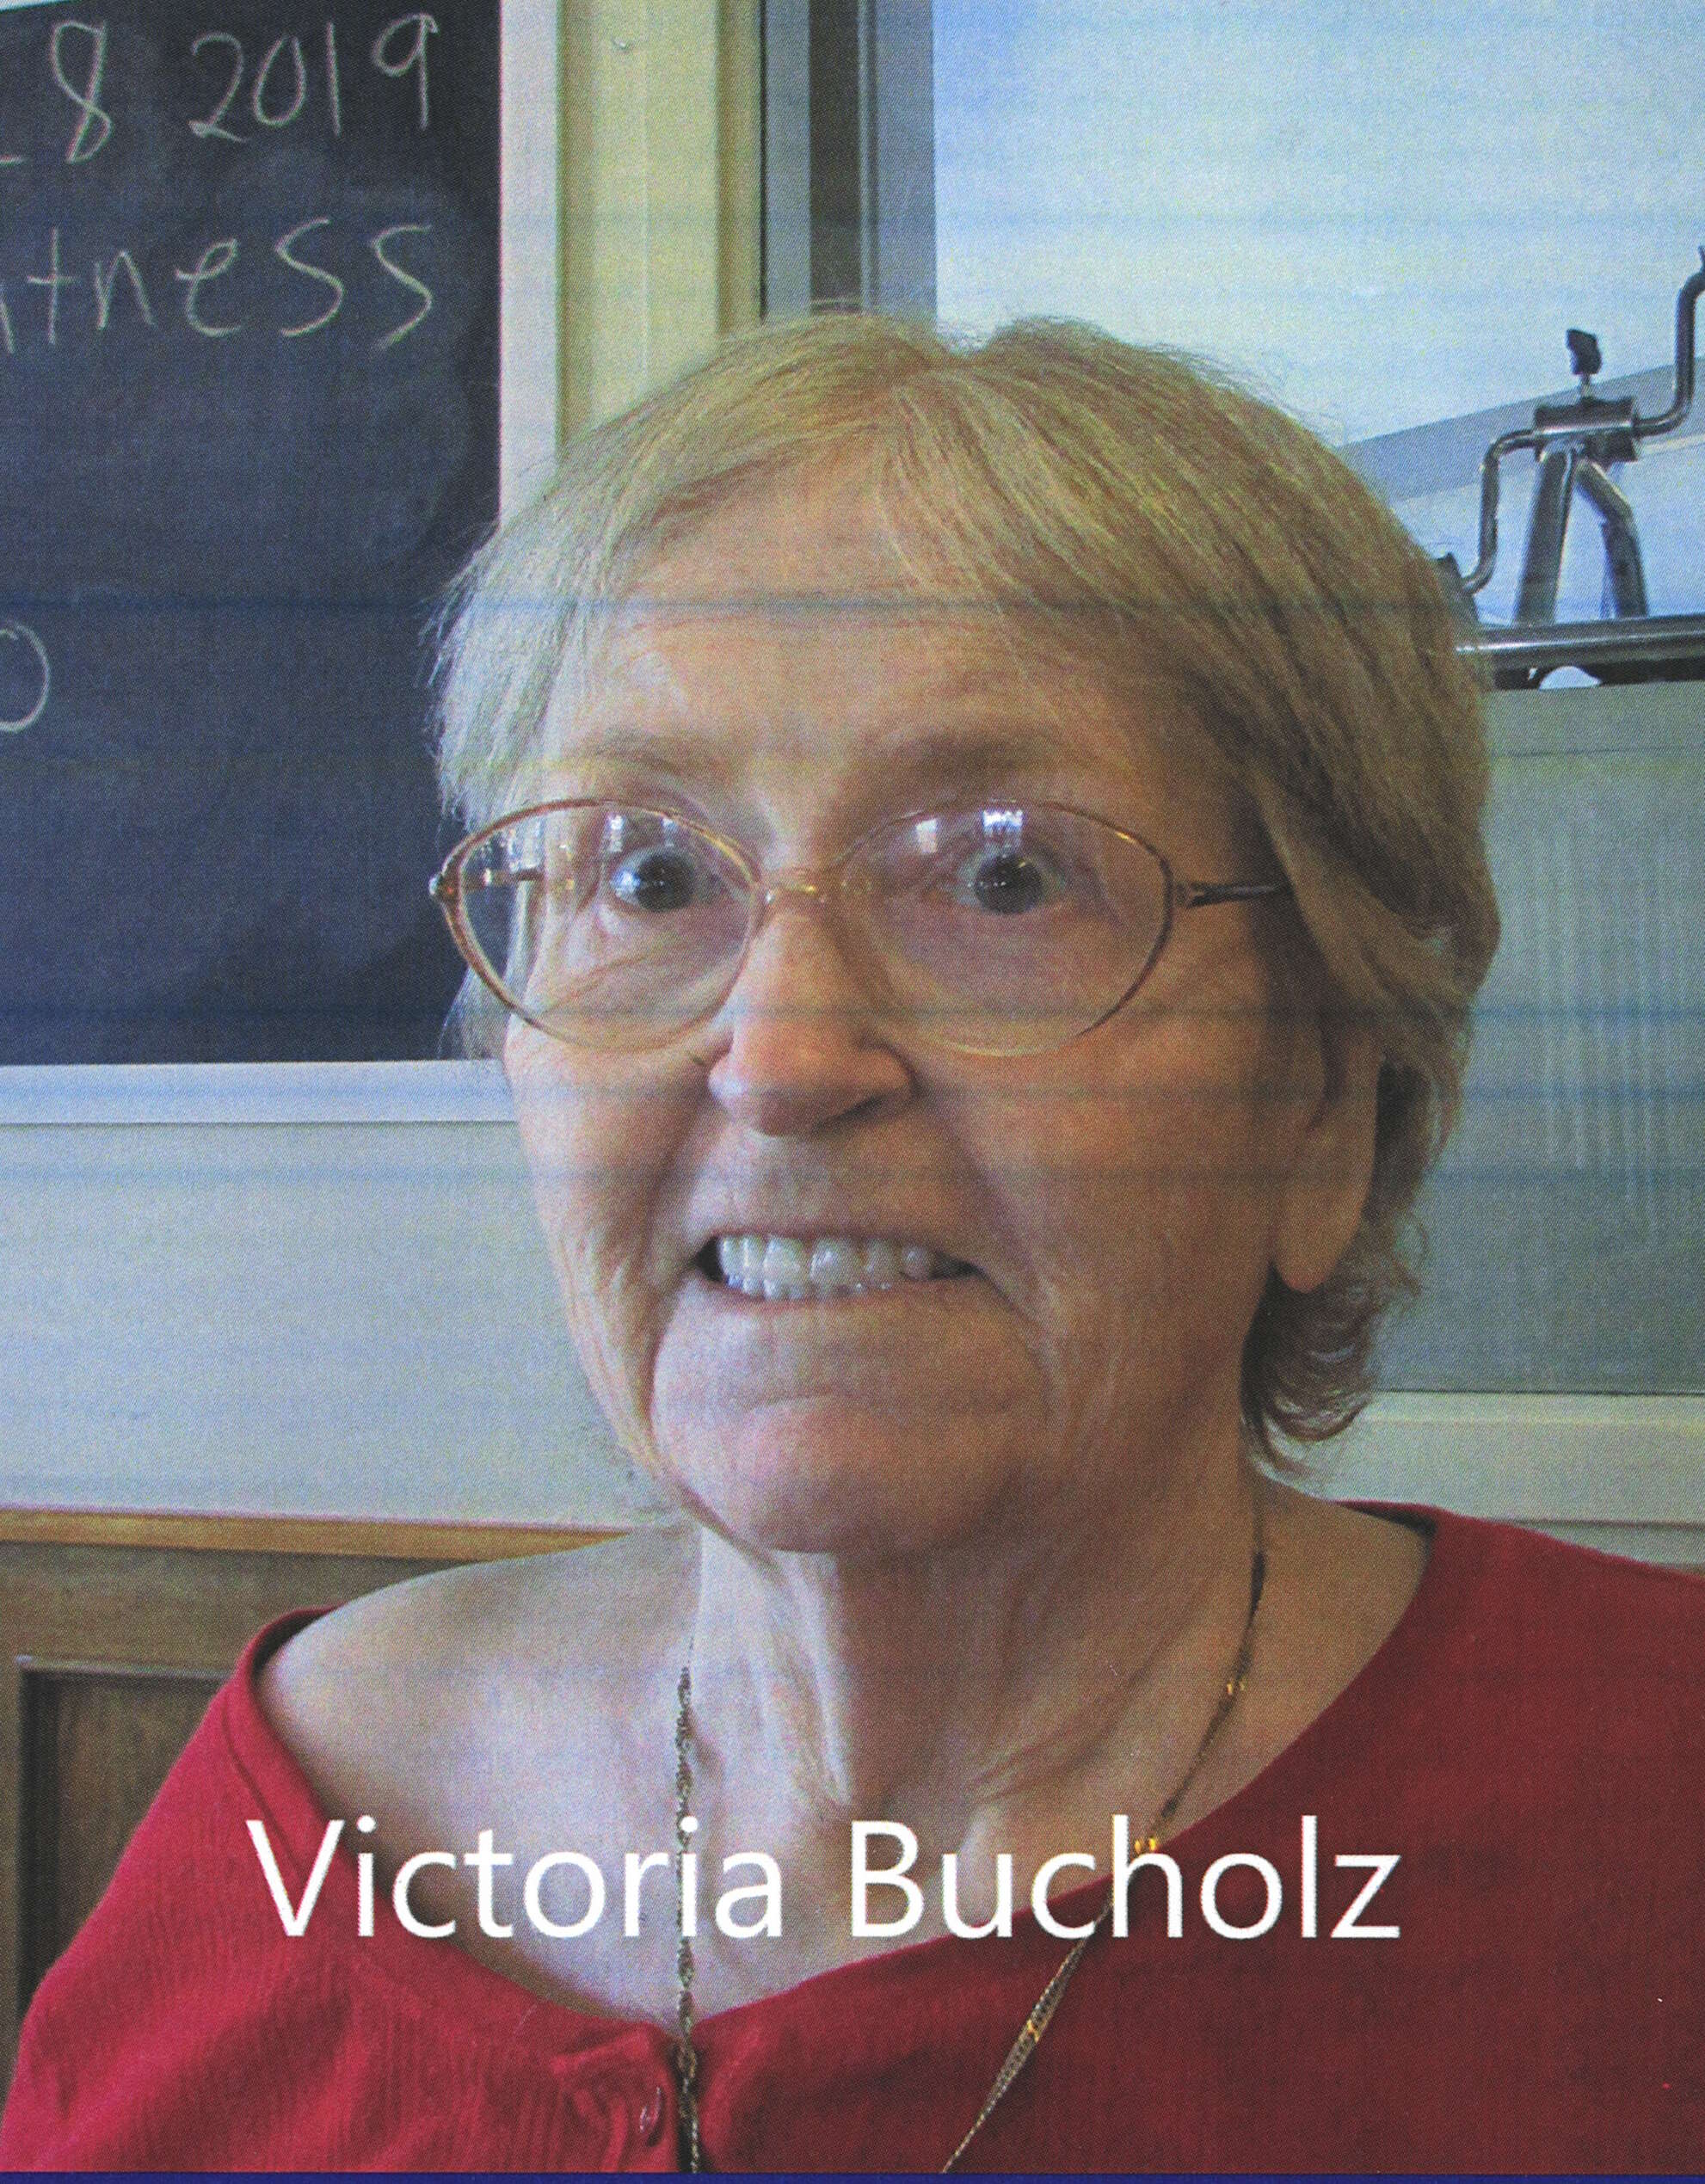 Victoria Bucholz